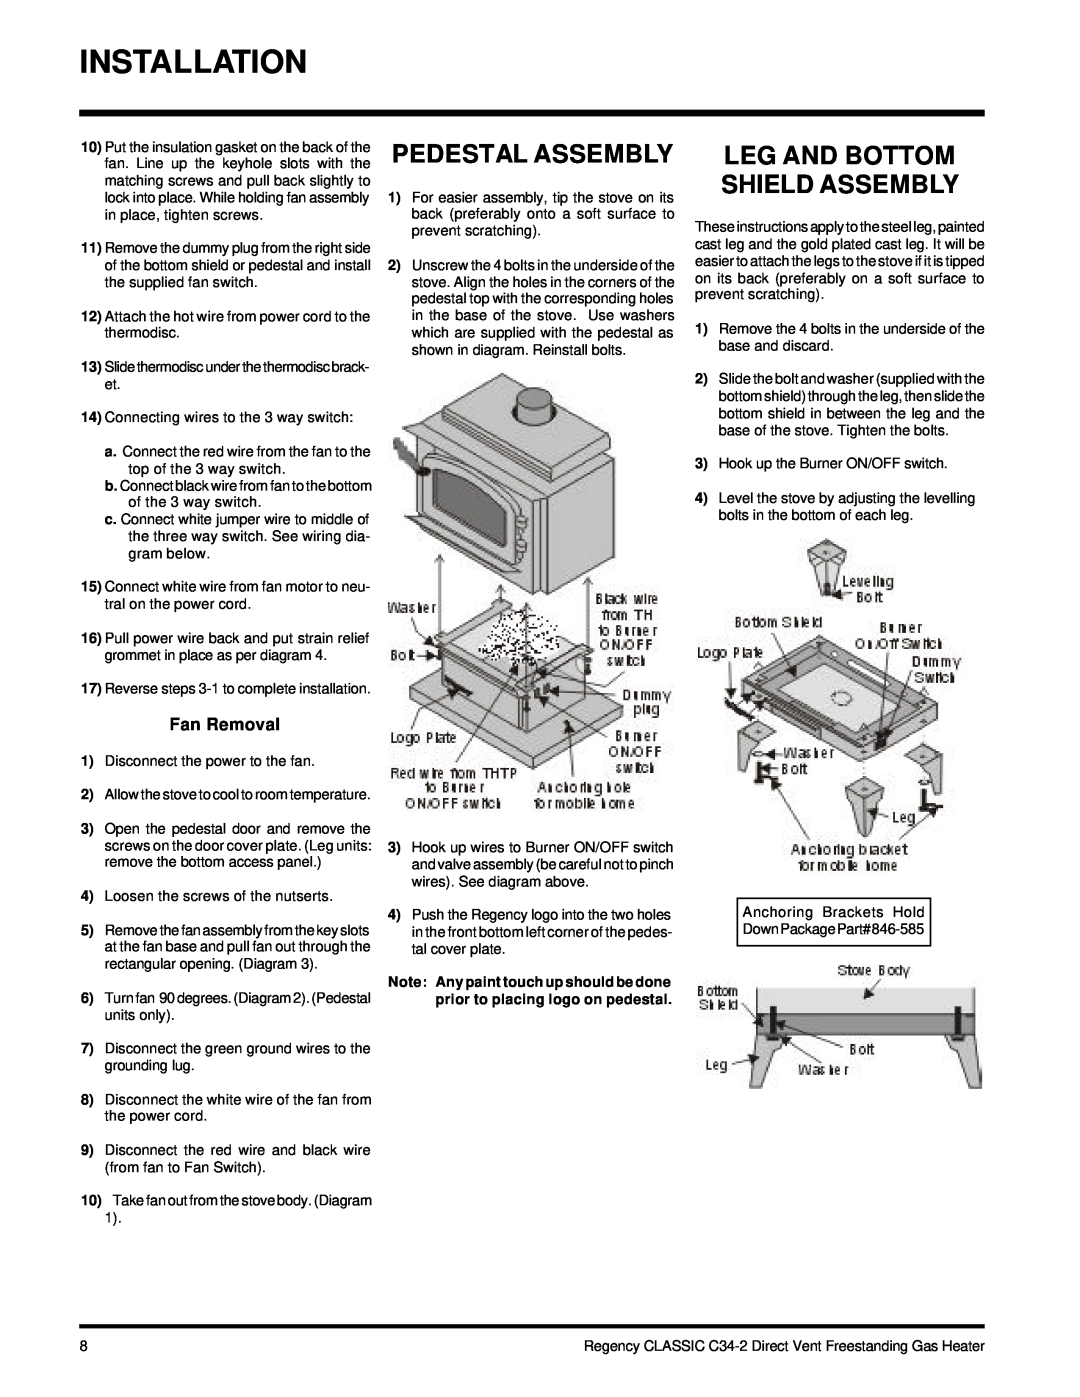 Regency C34-NG2, C34-LP2 installation manual Installation, Pedestal Assembly, Leg And Bottom Shield Assembly, Fan Removal 